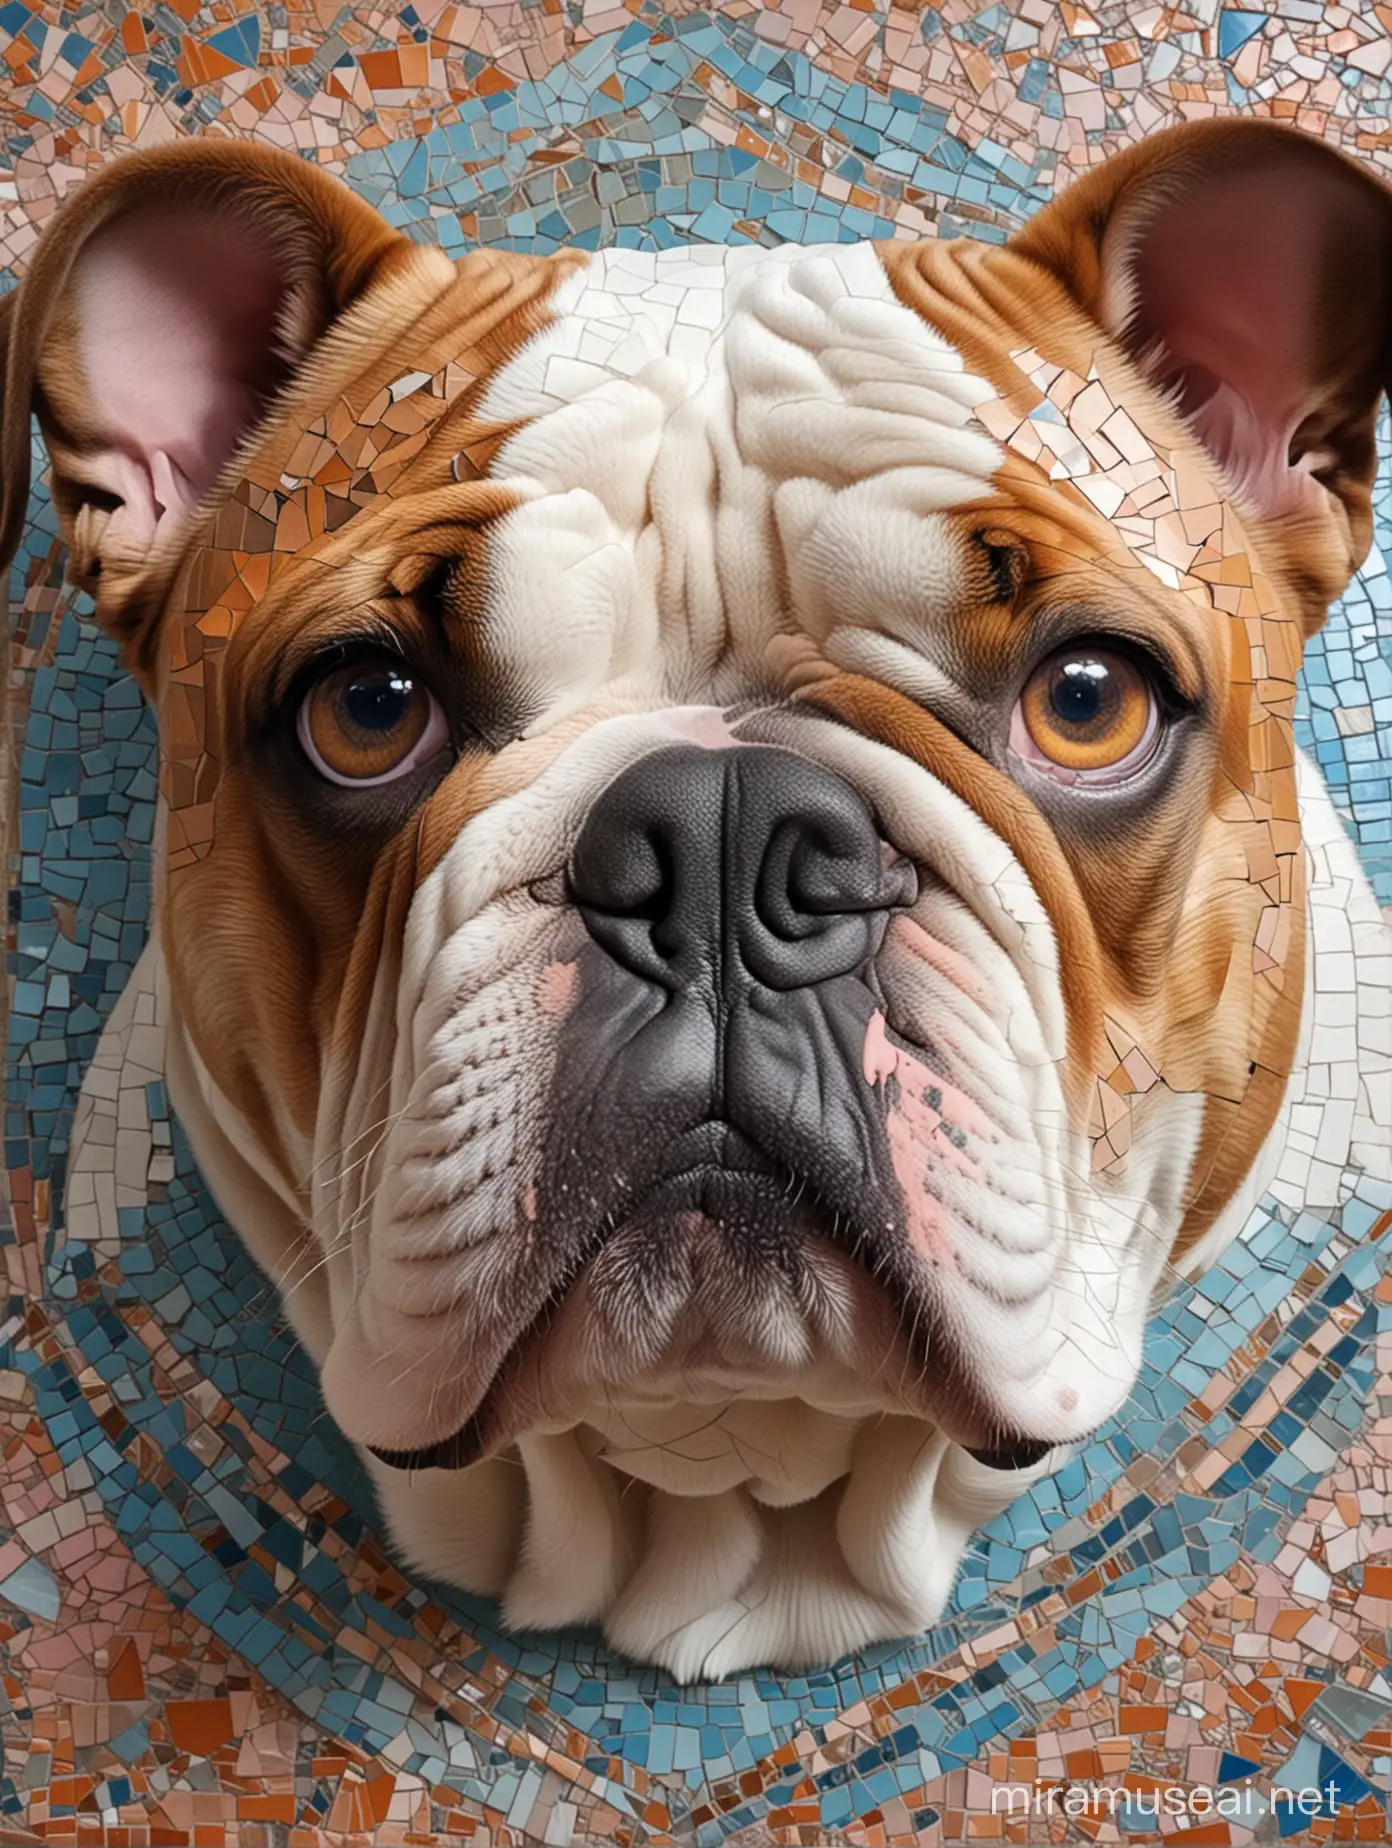 Symmetrical Bulldog Mosaic Portrait with Intense Blue Eyes